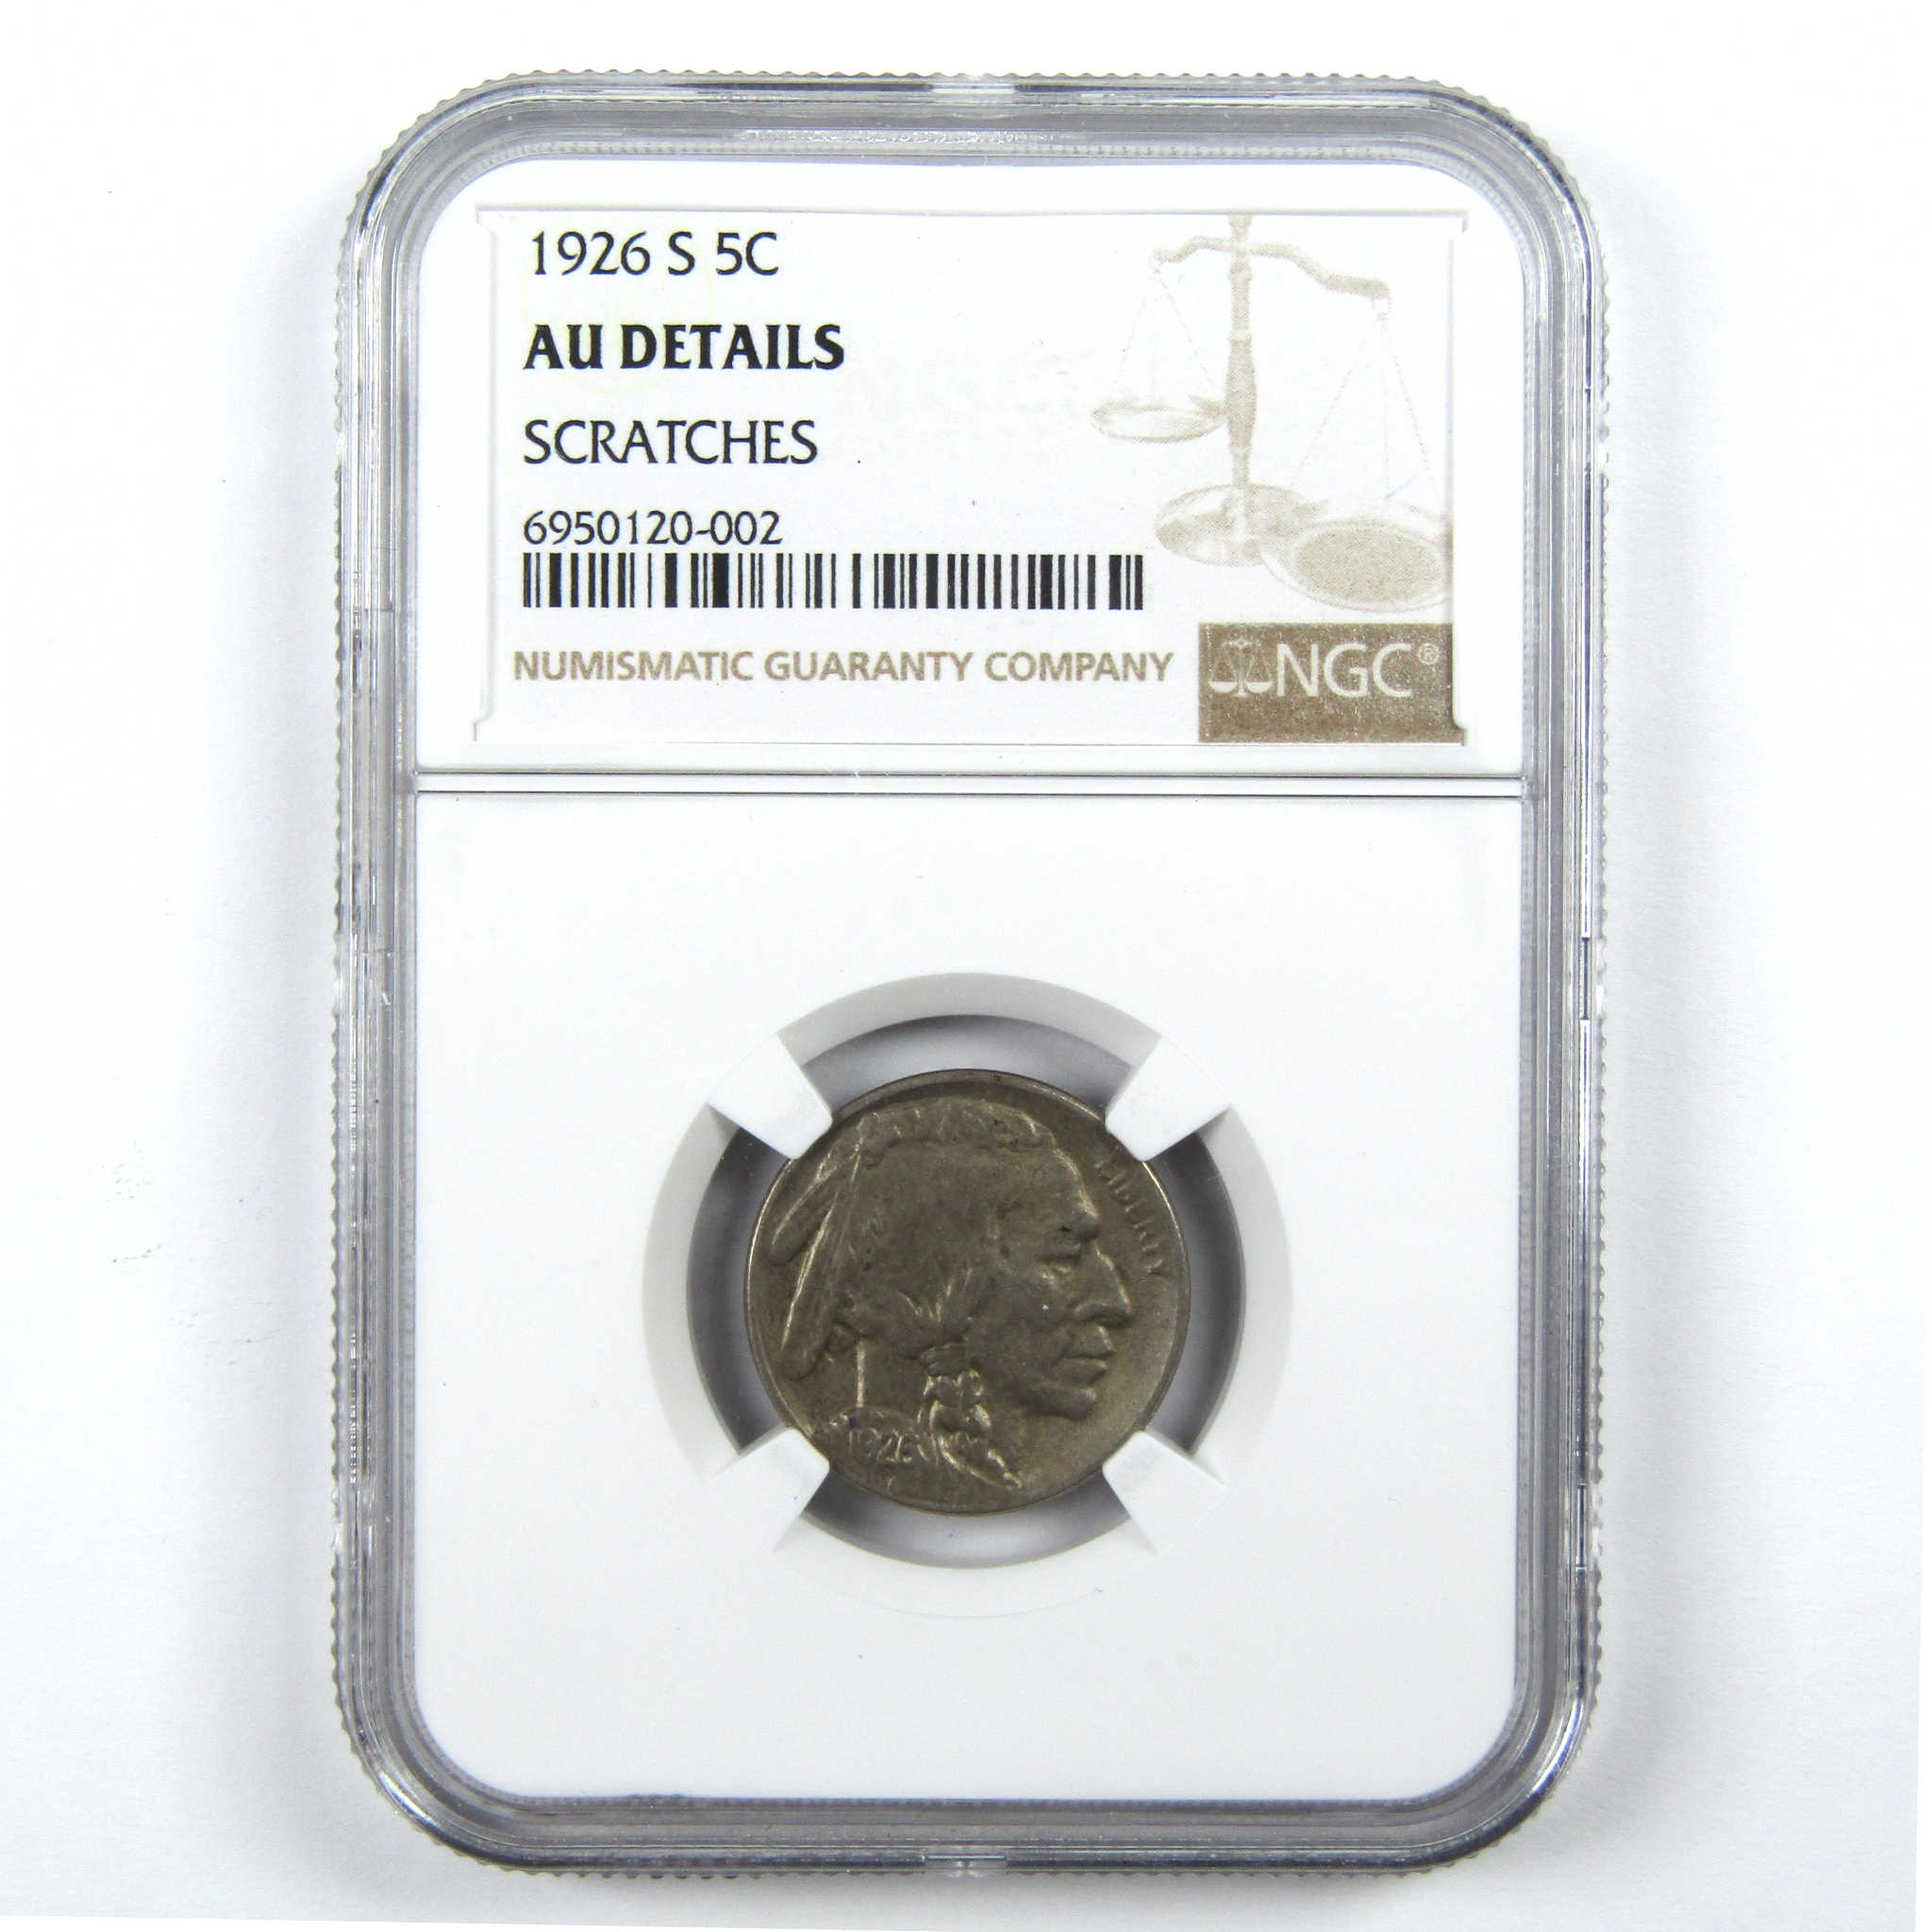 1926 S Indian Head Buffalo Nickel AU Details NGC 5c Coin SKU:I11711